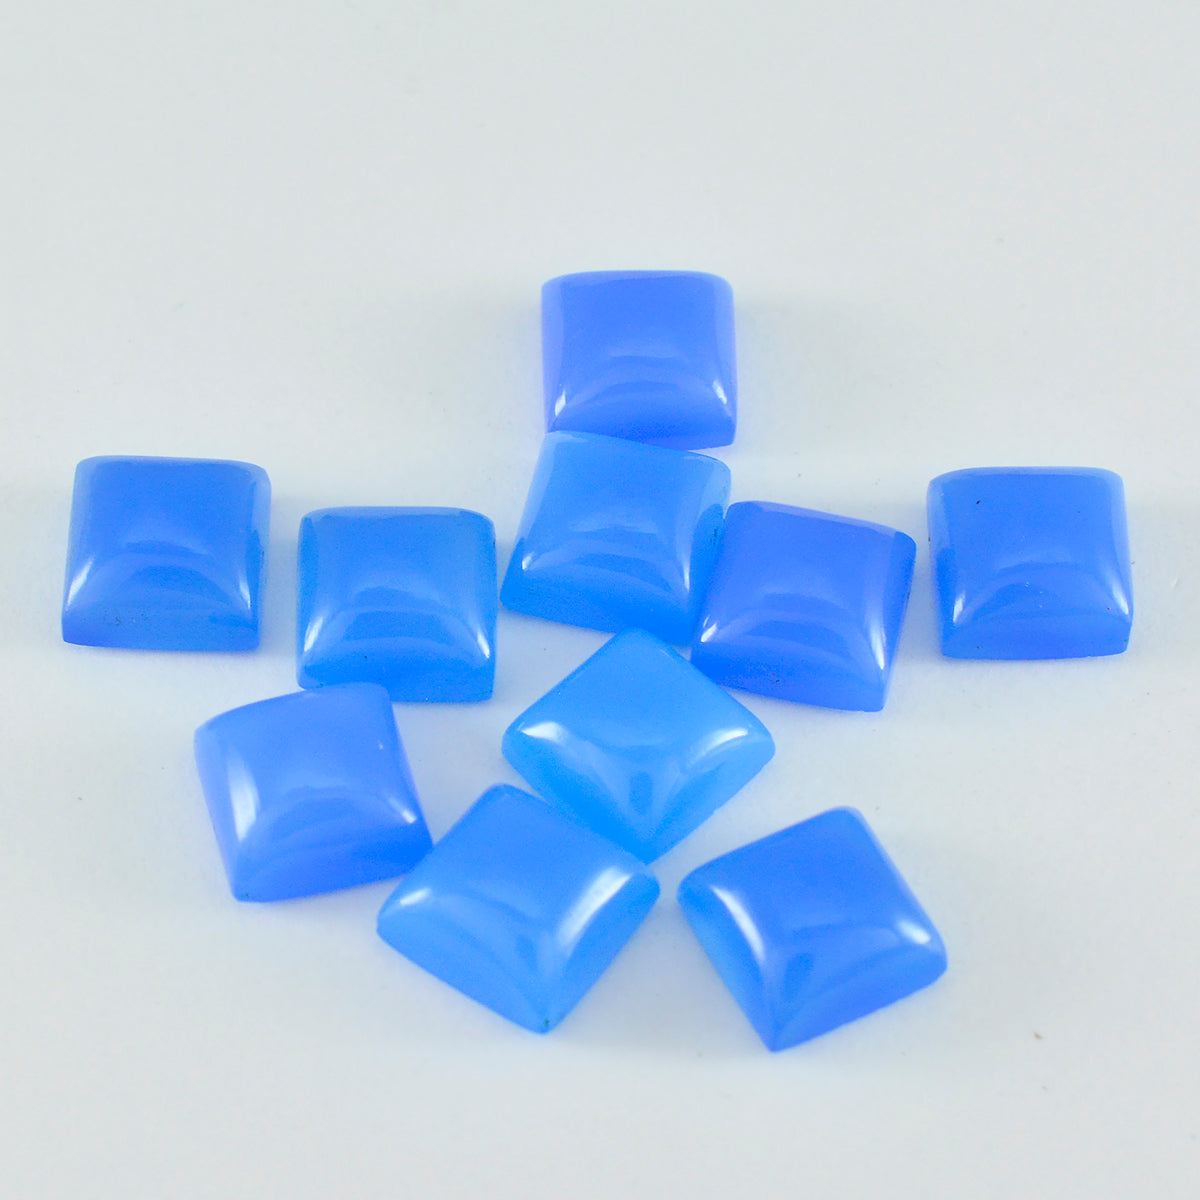 Riyogems 1PC blauwe chalcedoon cabochon 7x7 mm vierkante vorm uitstekende kwaliteit edelstenen